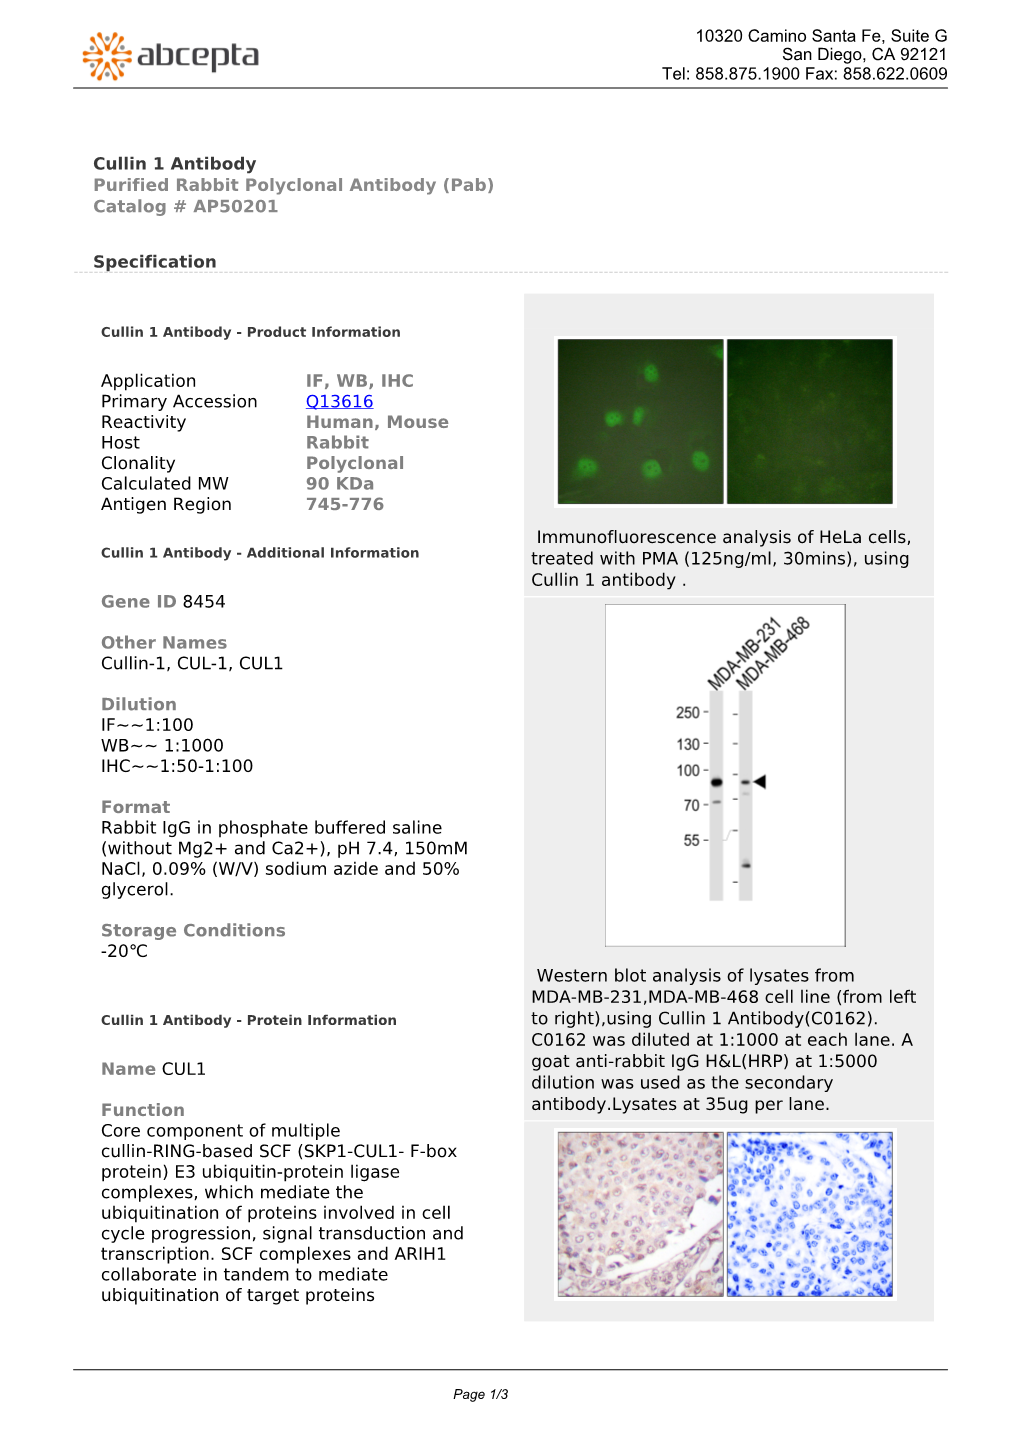 Cullin 1 Antibody Purified Rabbit Polyclonal Antibody (Pab) Catalog # AP50201